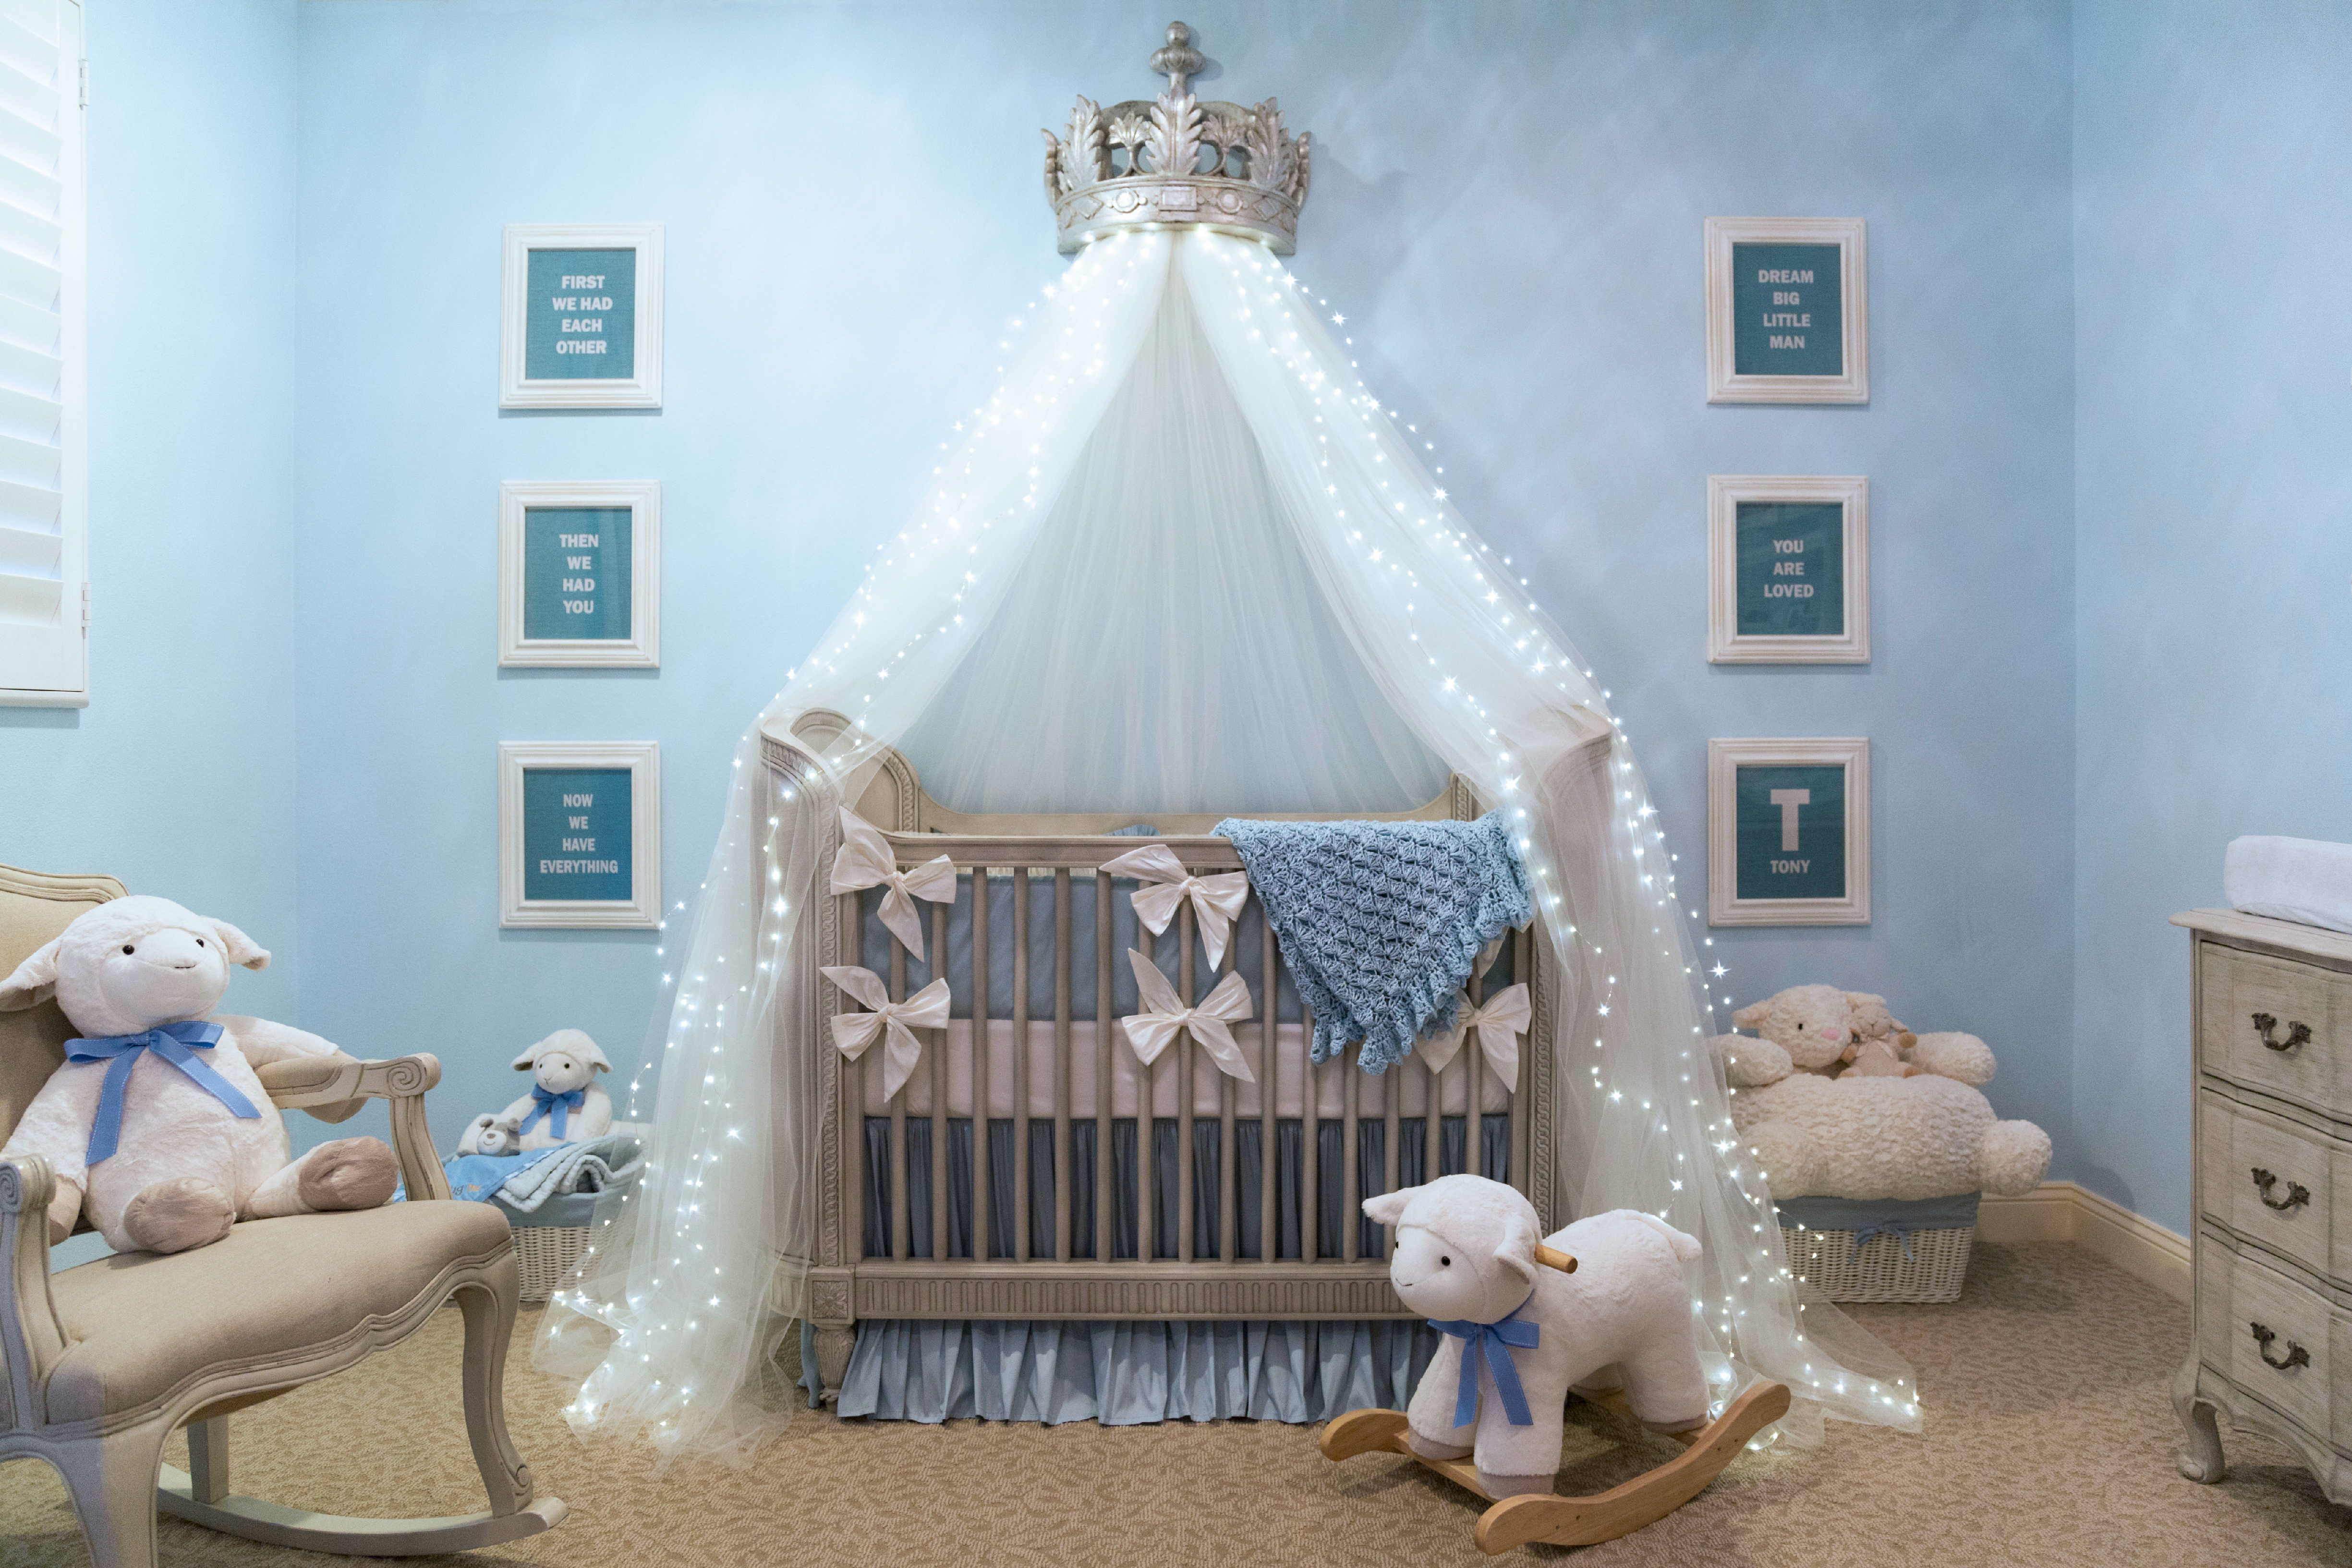 Prince Themed Nursery Room - Project Nursery